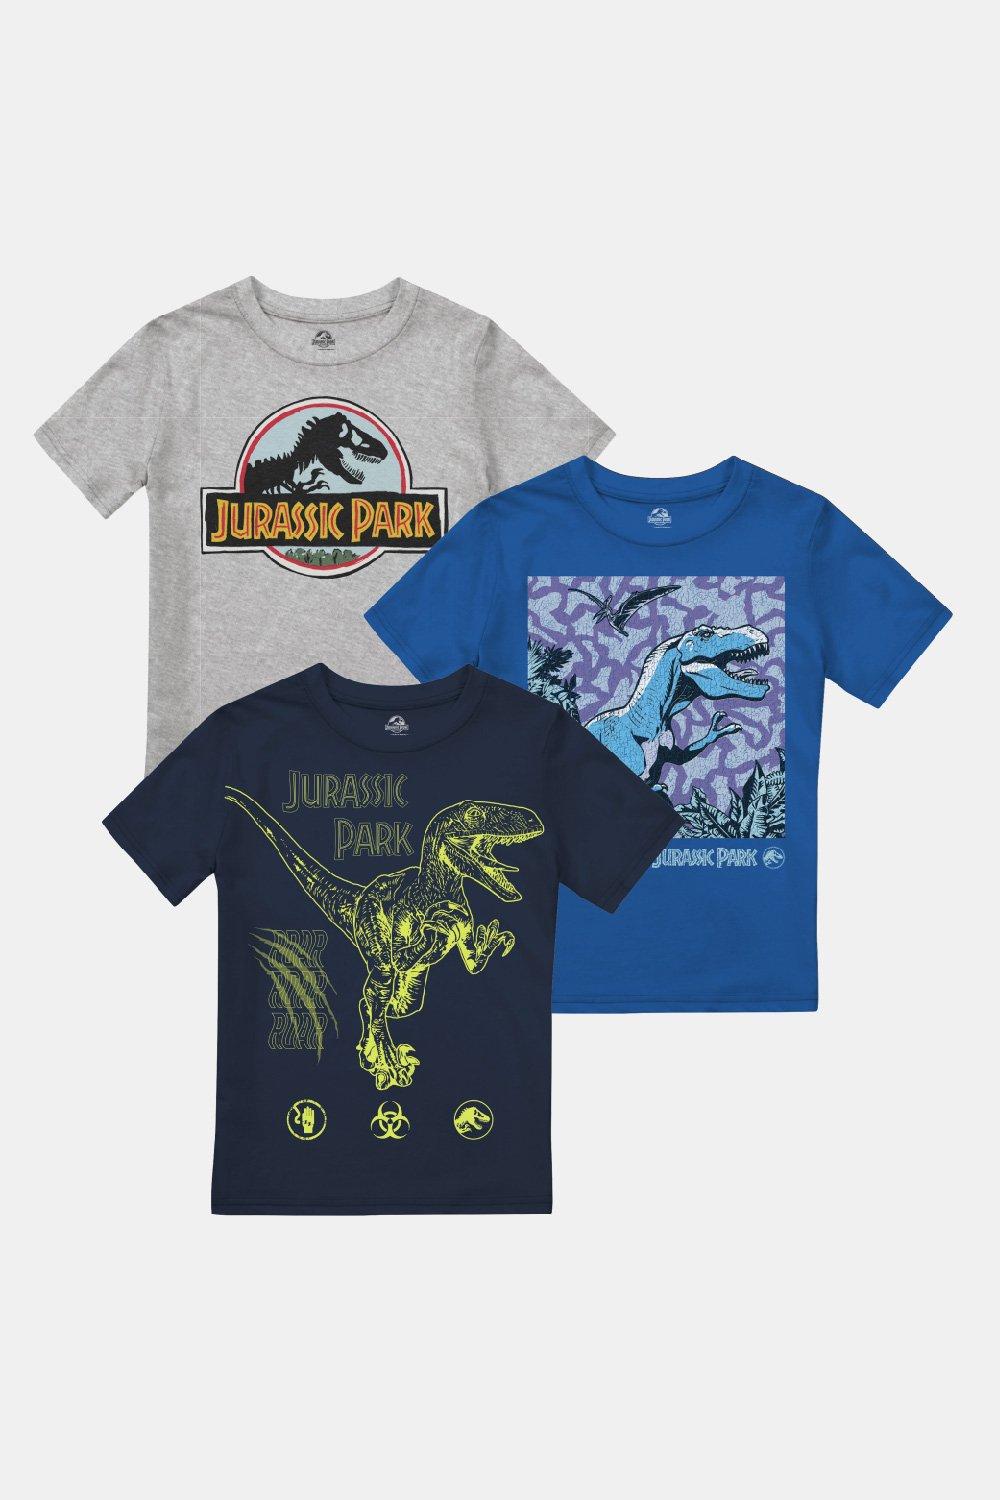 Trex & Raptor Boys T-Shirt 3 Pack